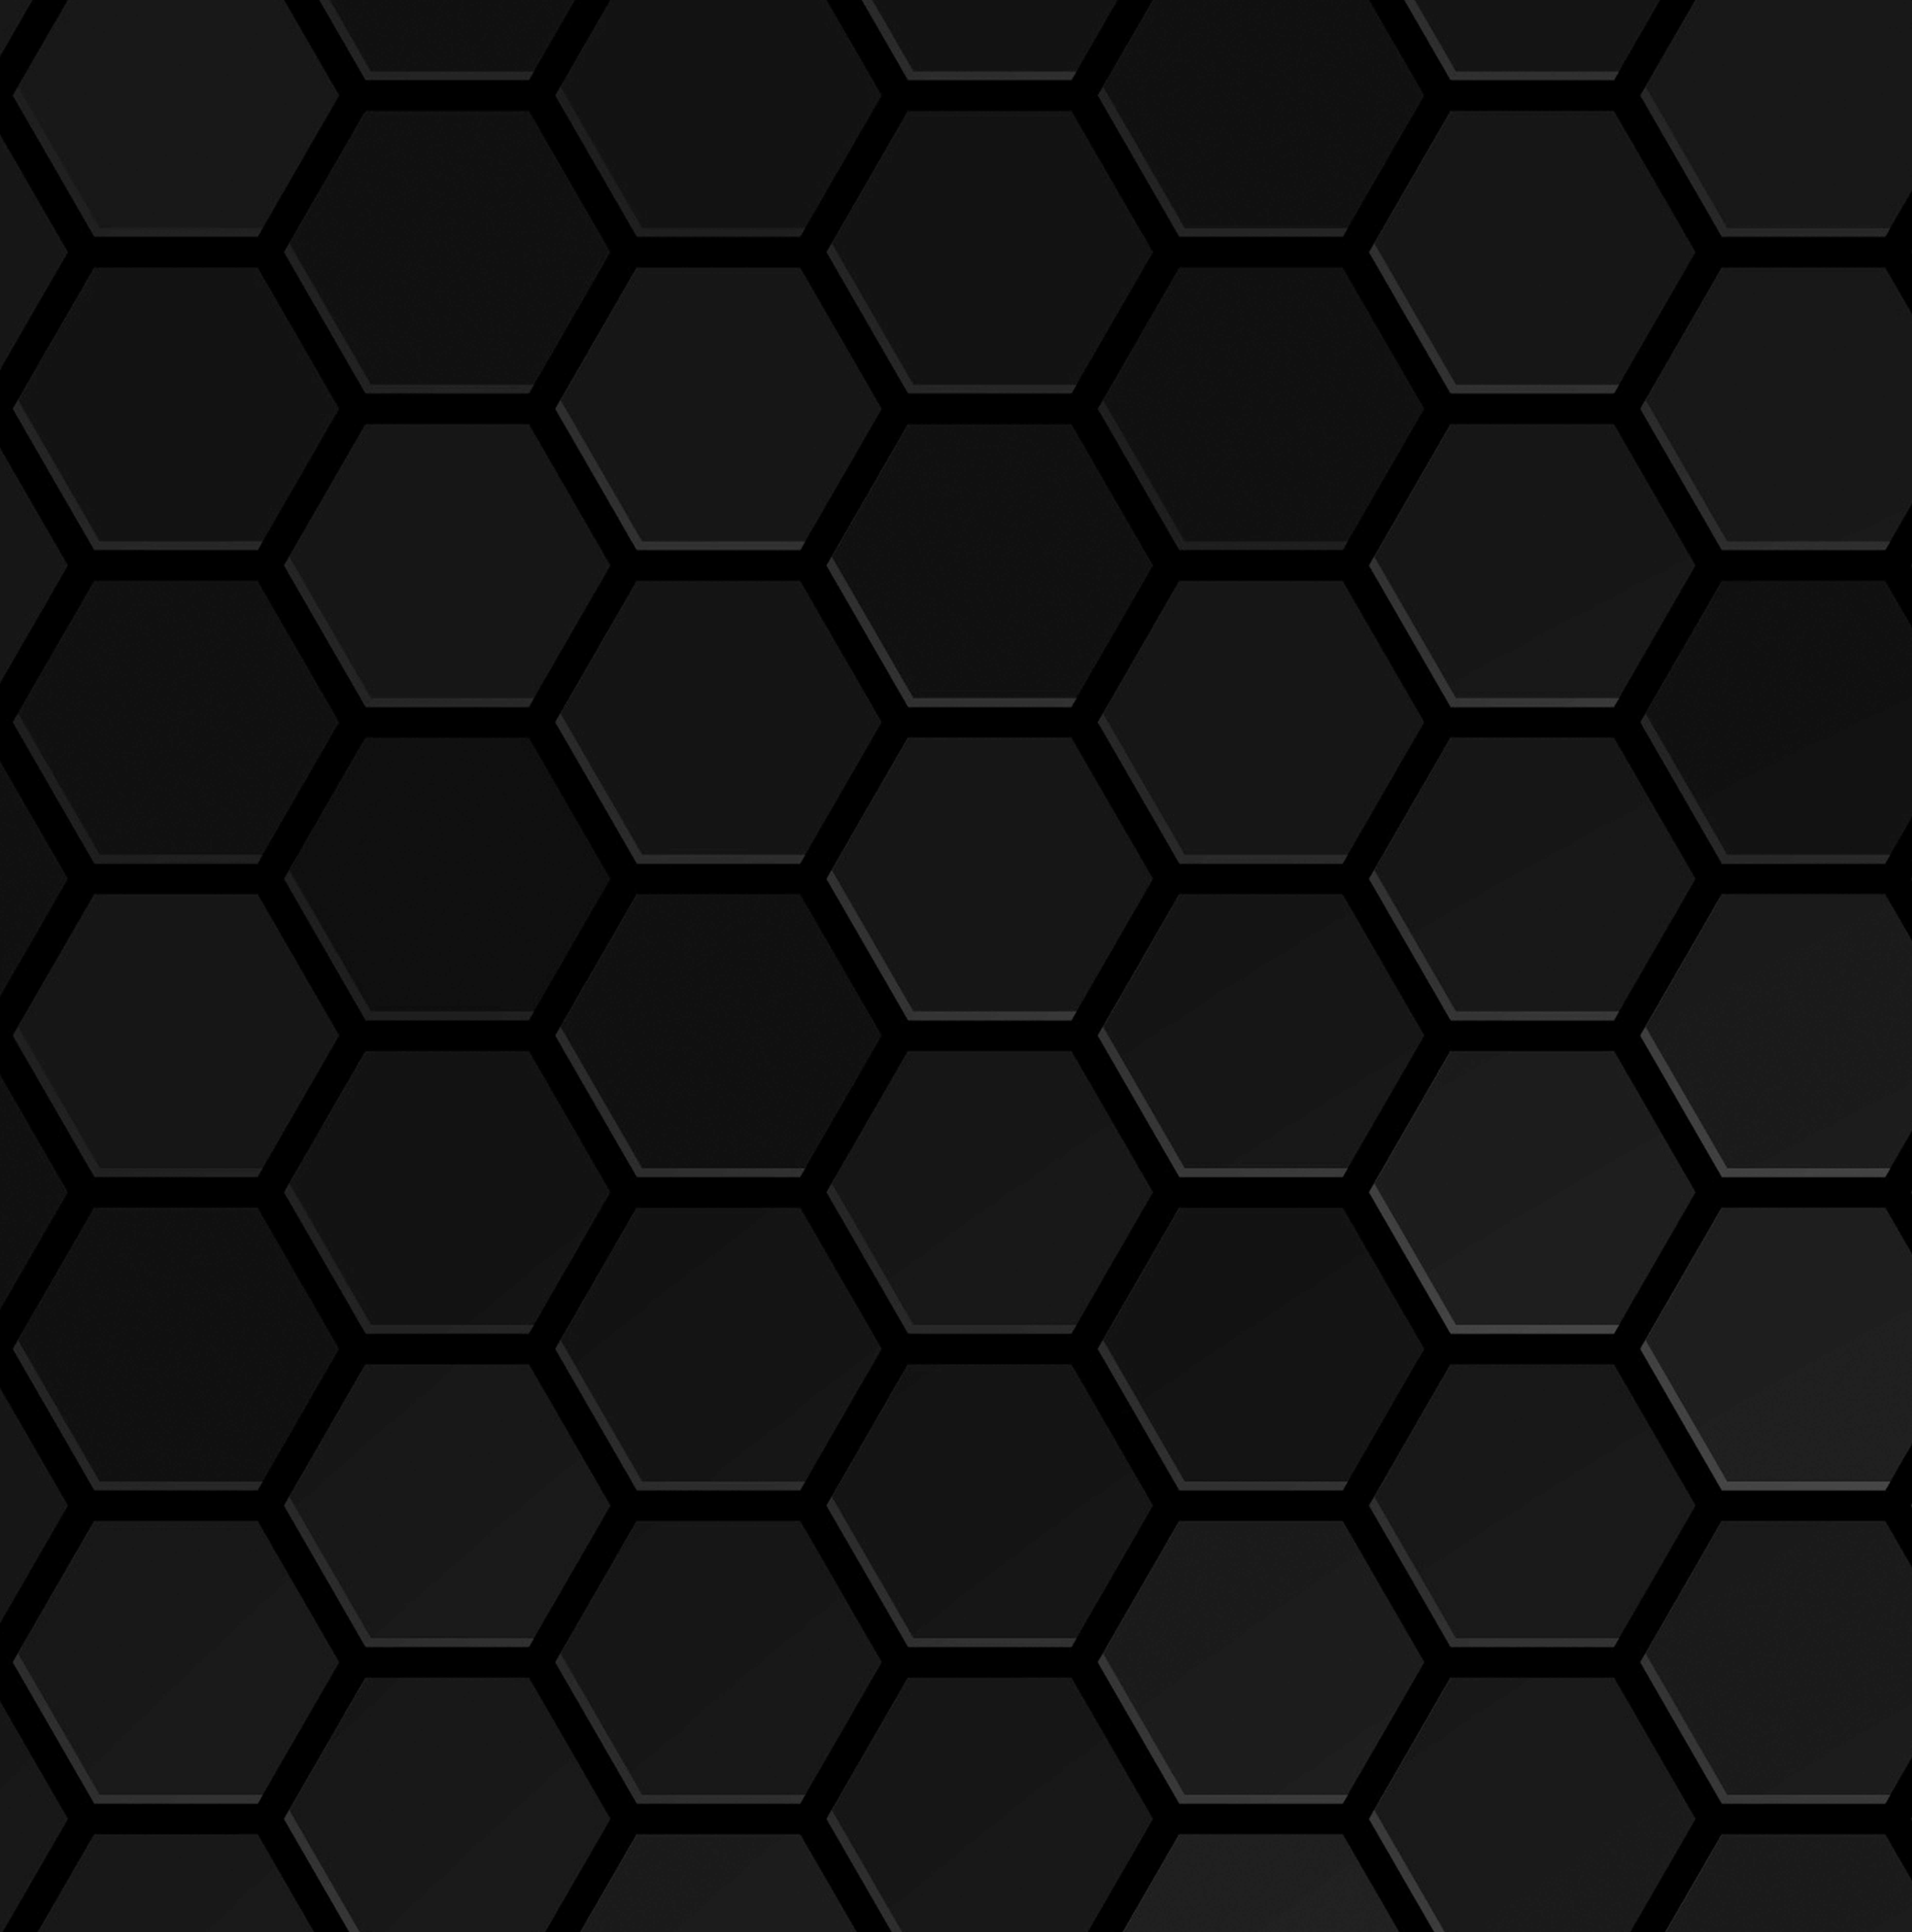 hexagonal background pattern